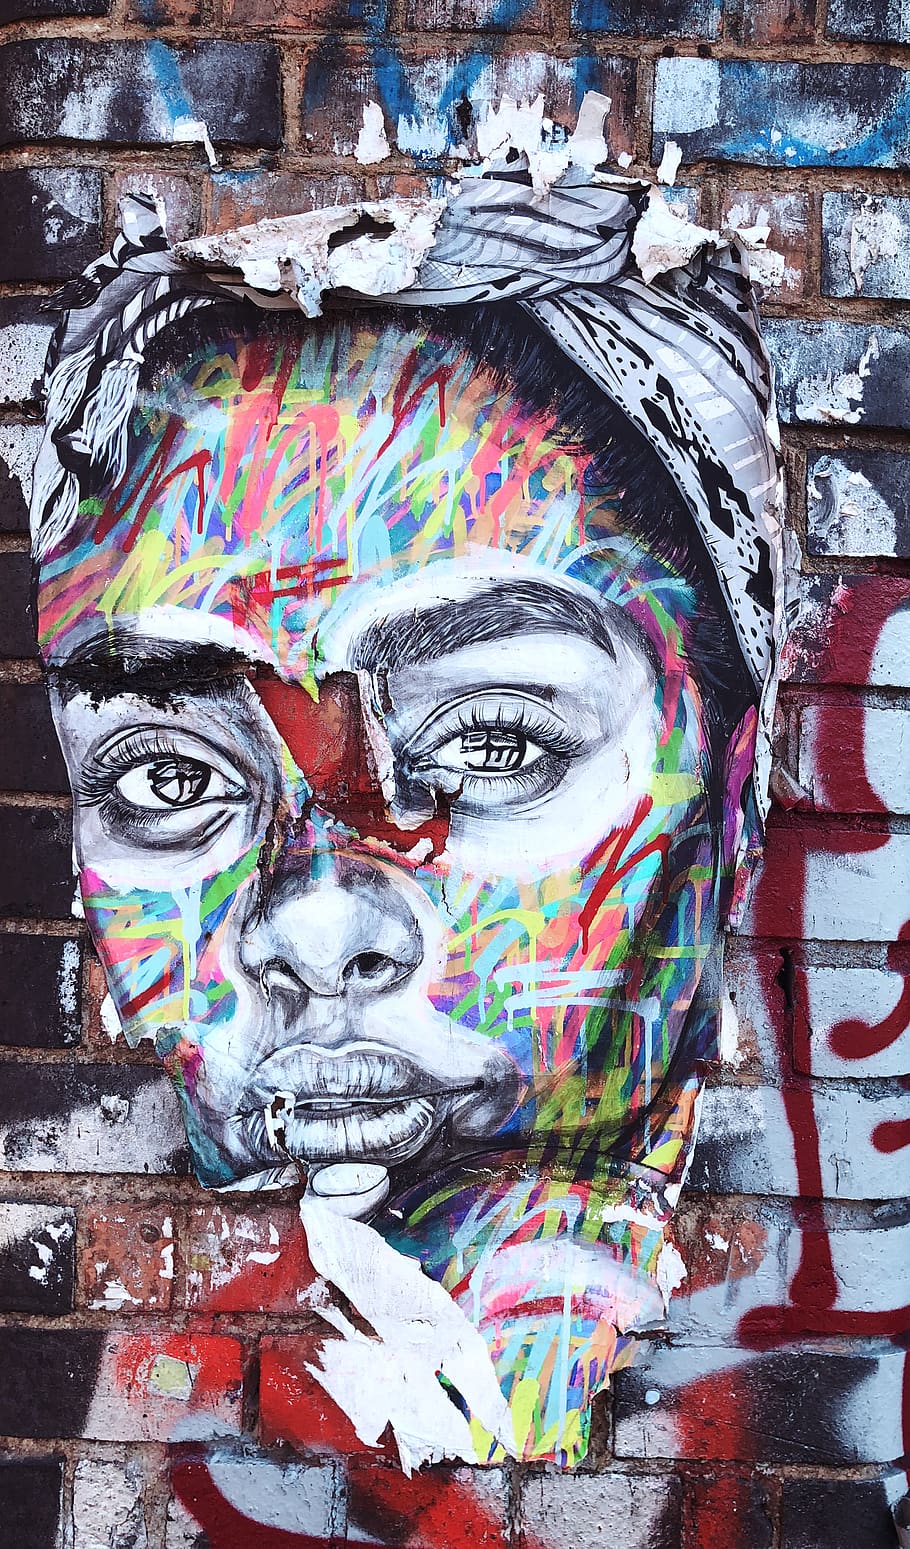 graffiti of woman's face on wall, art, brick, street art, london